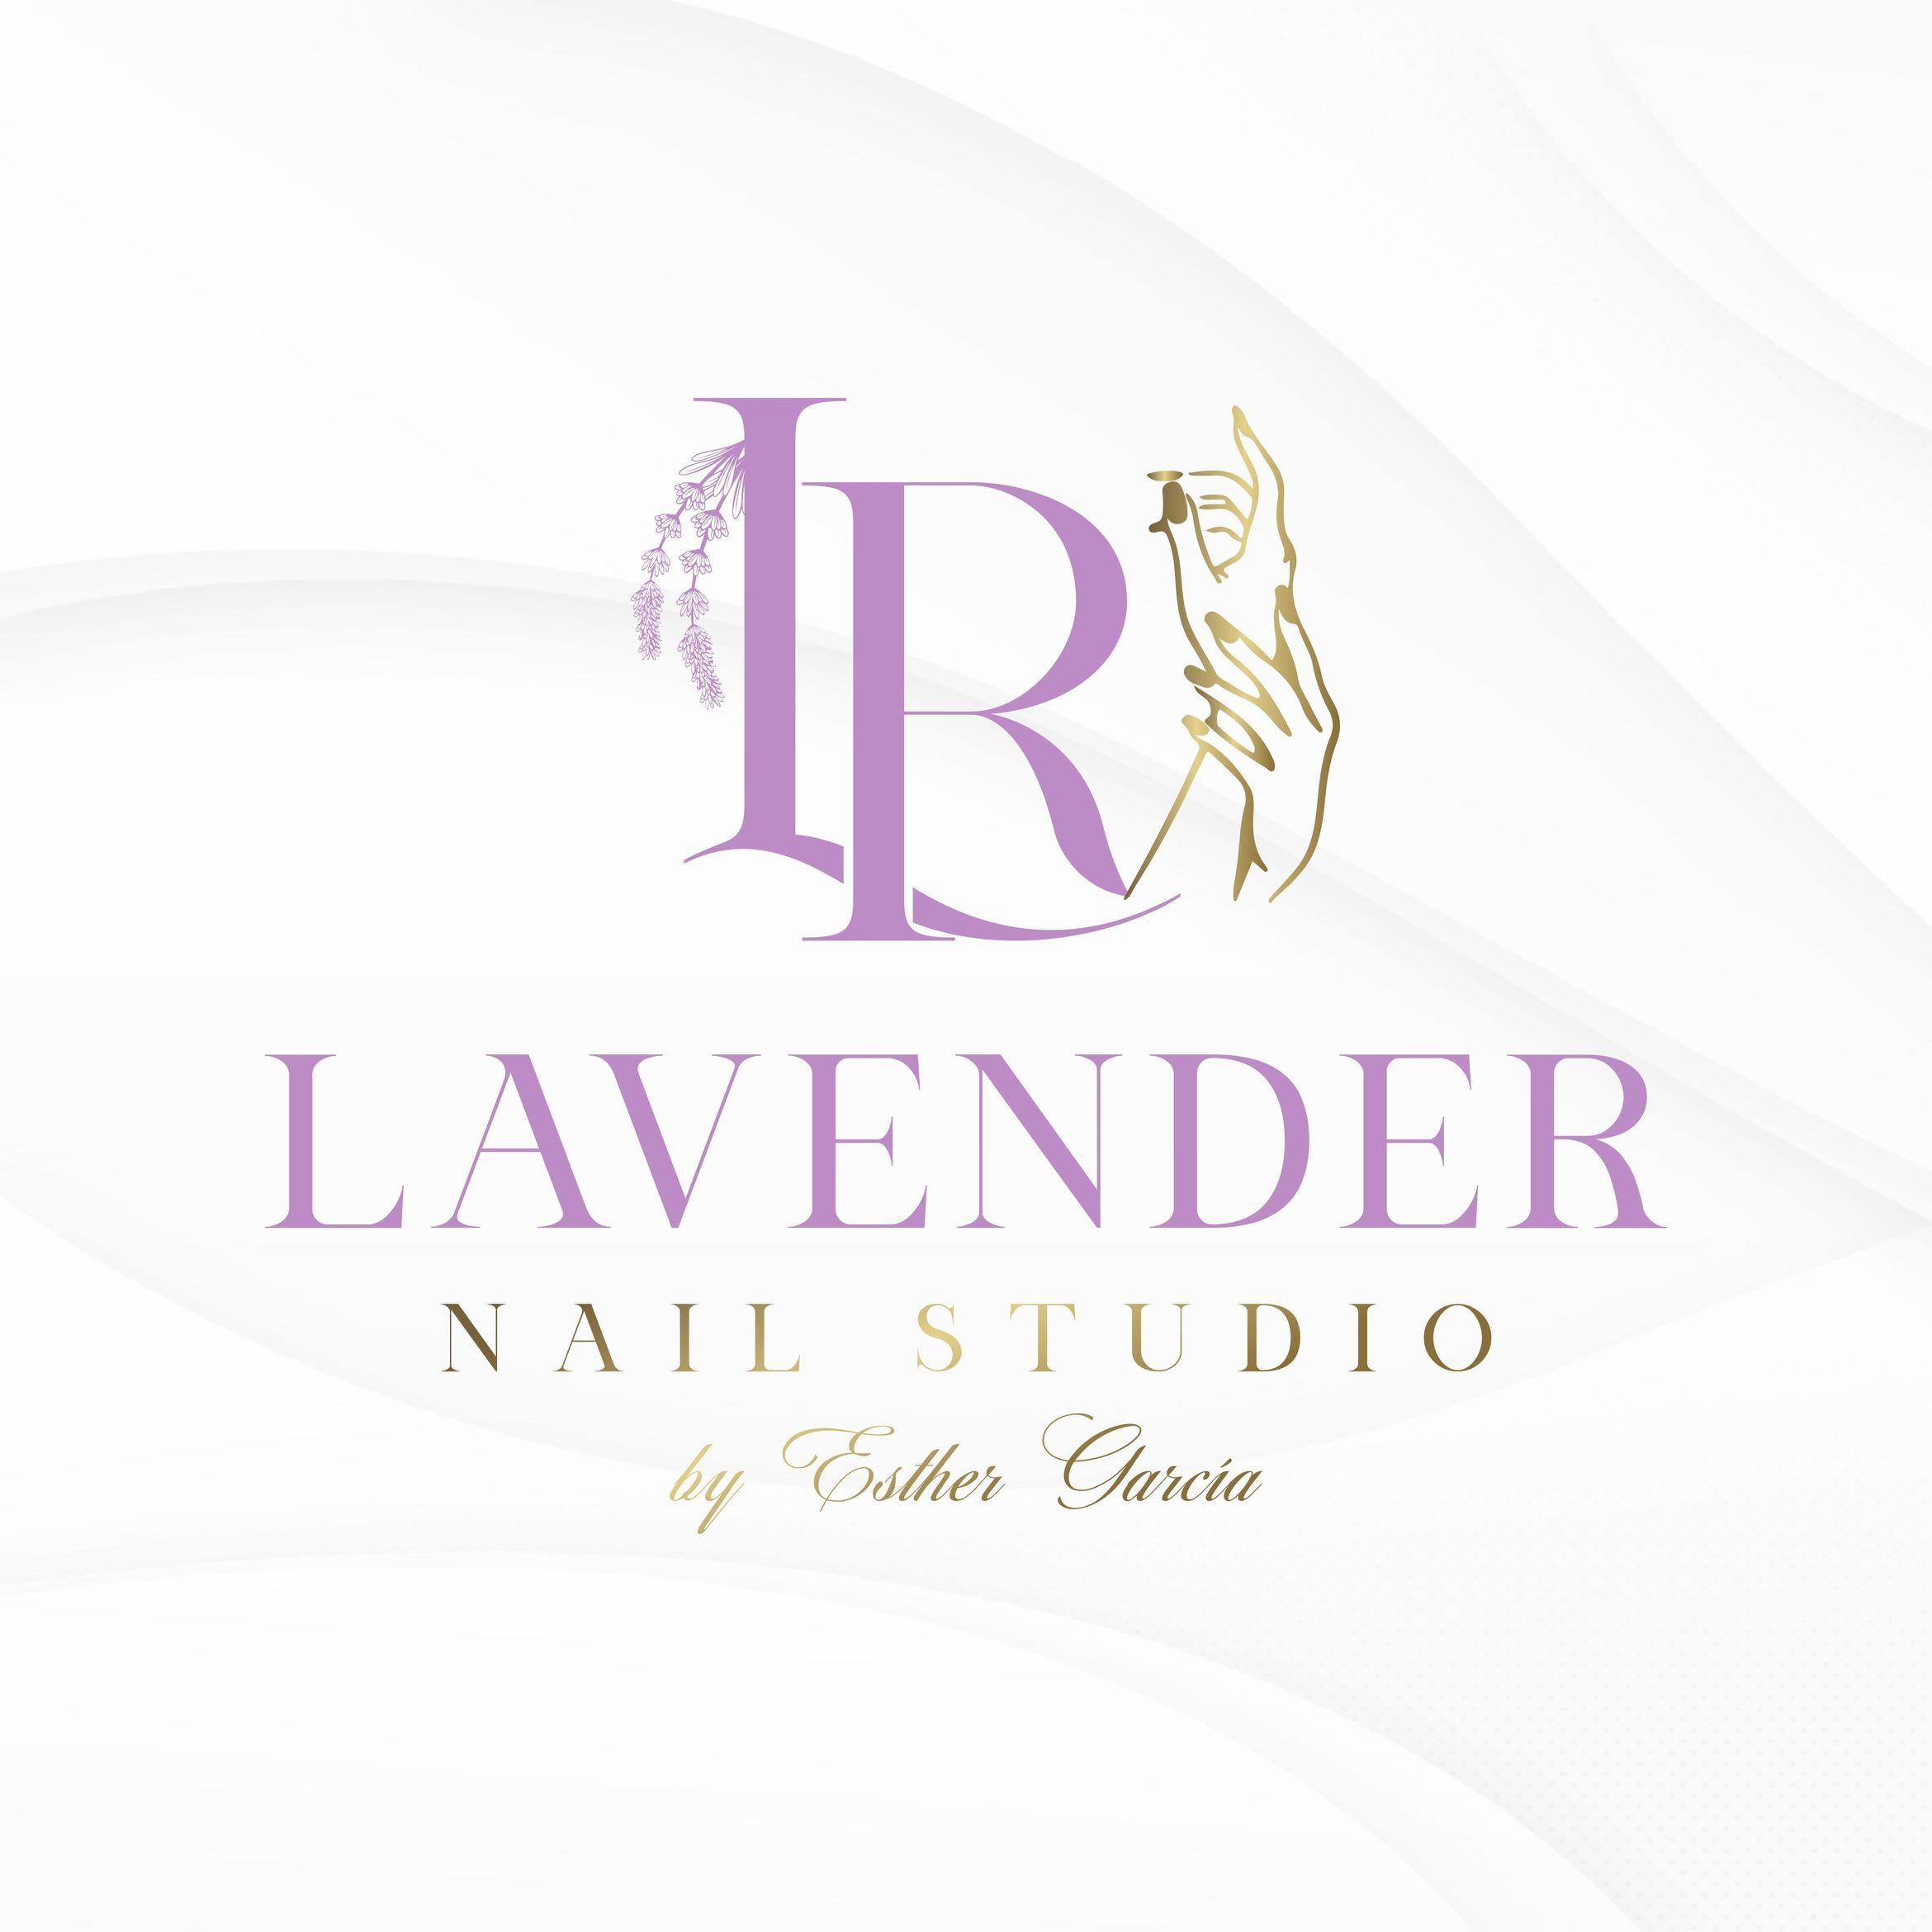 Lavender Nail Studio By Esther Garcia, 7900 sw 26 st, Miami, 33155